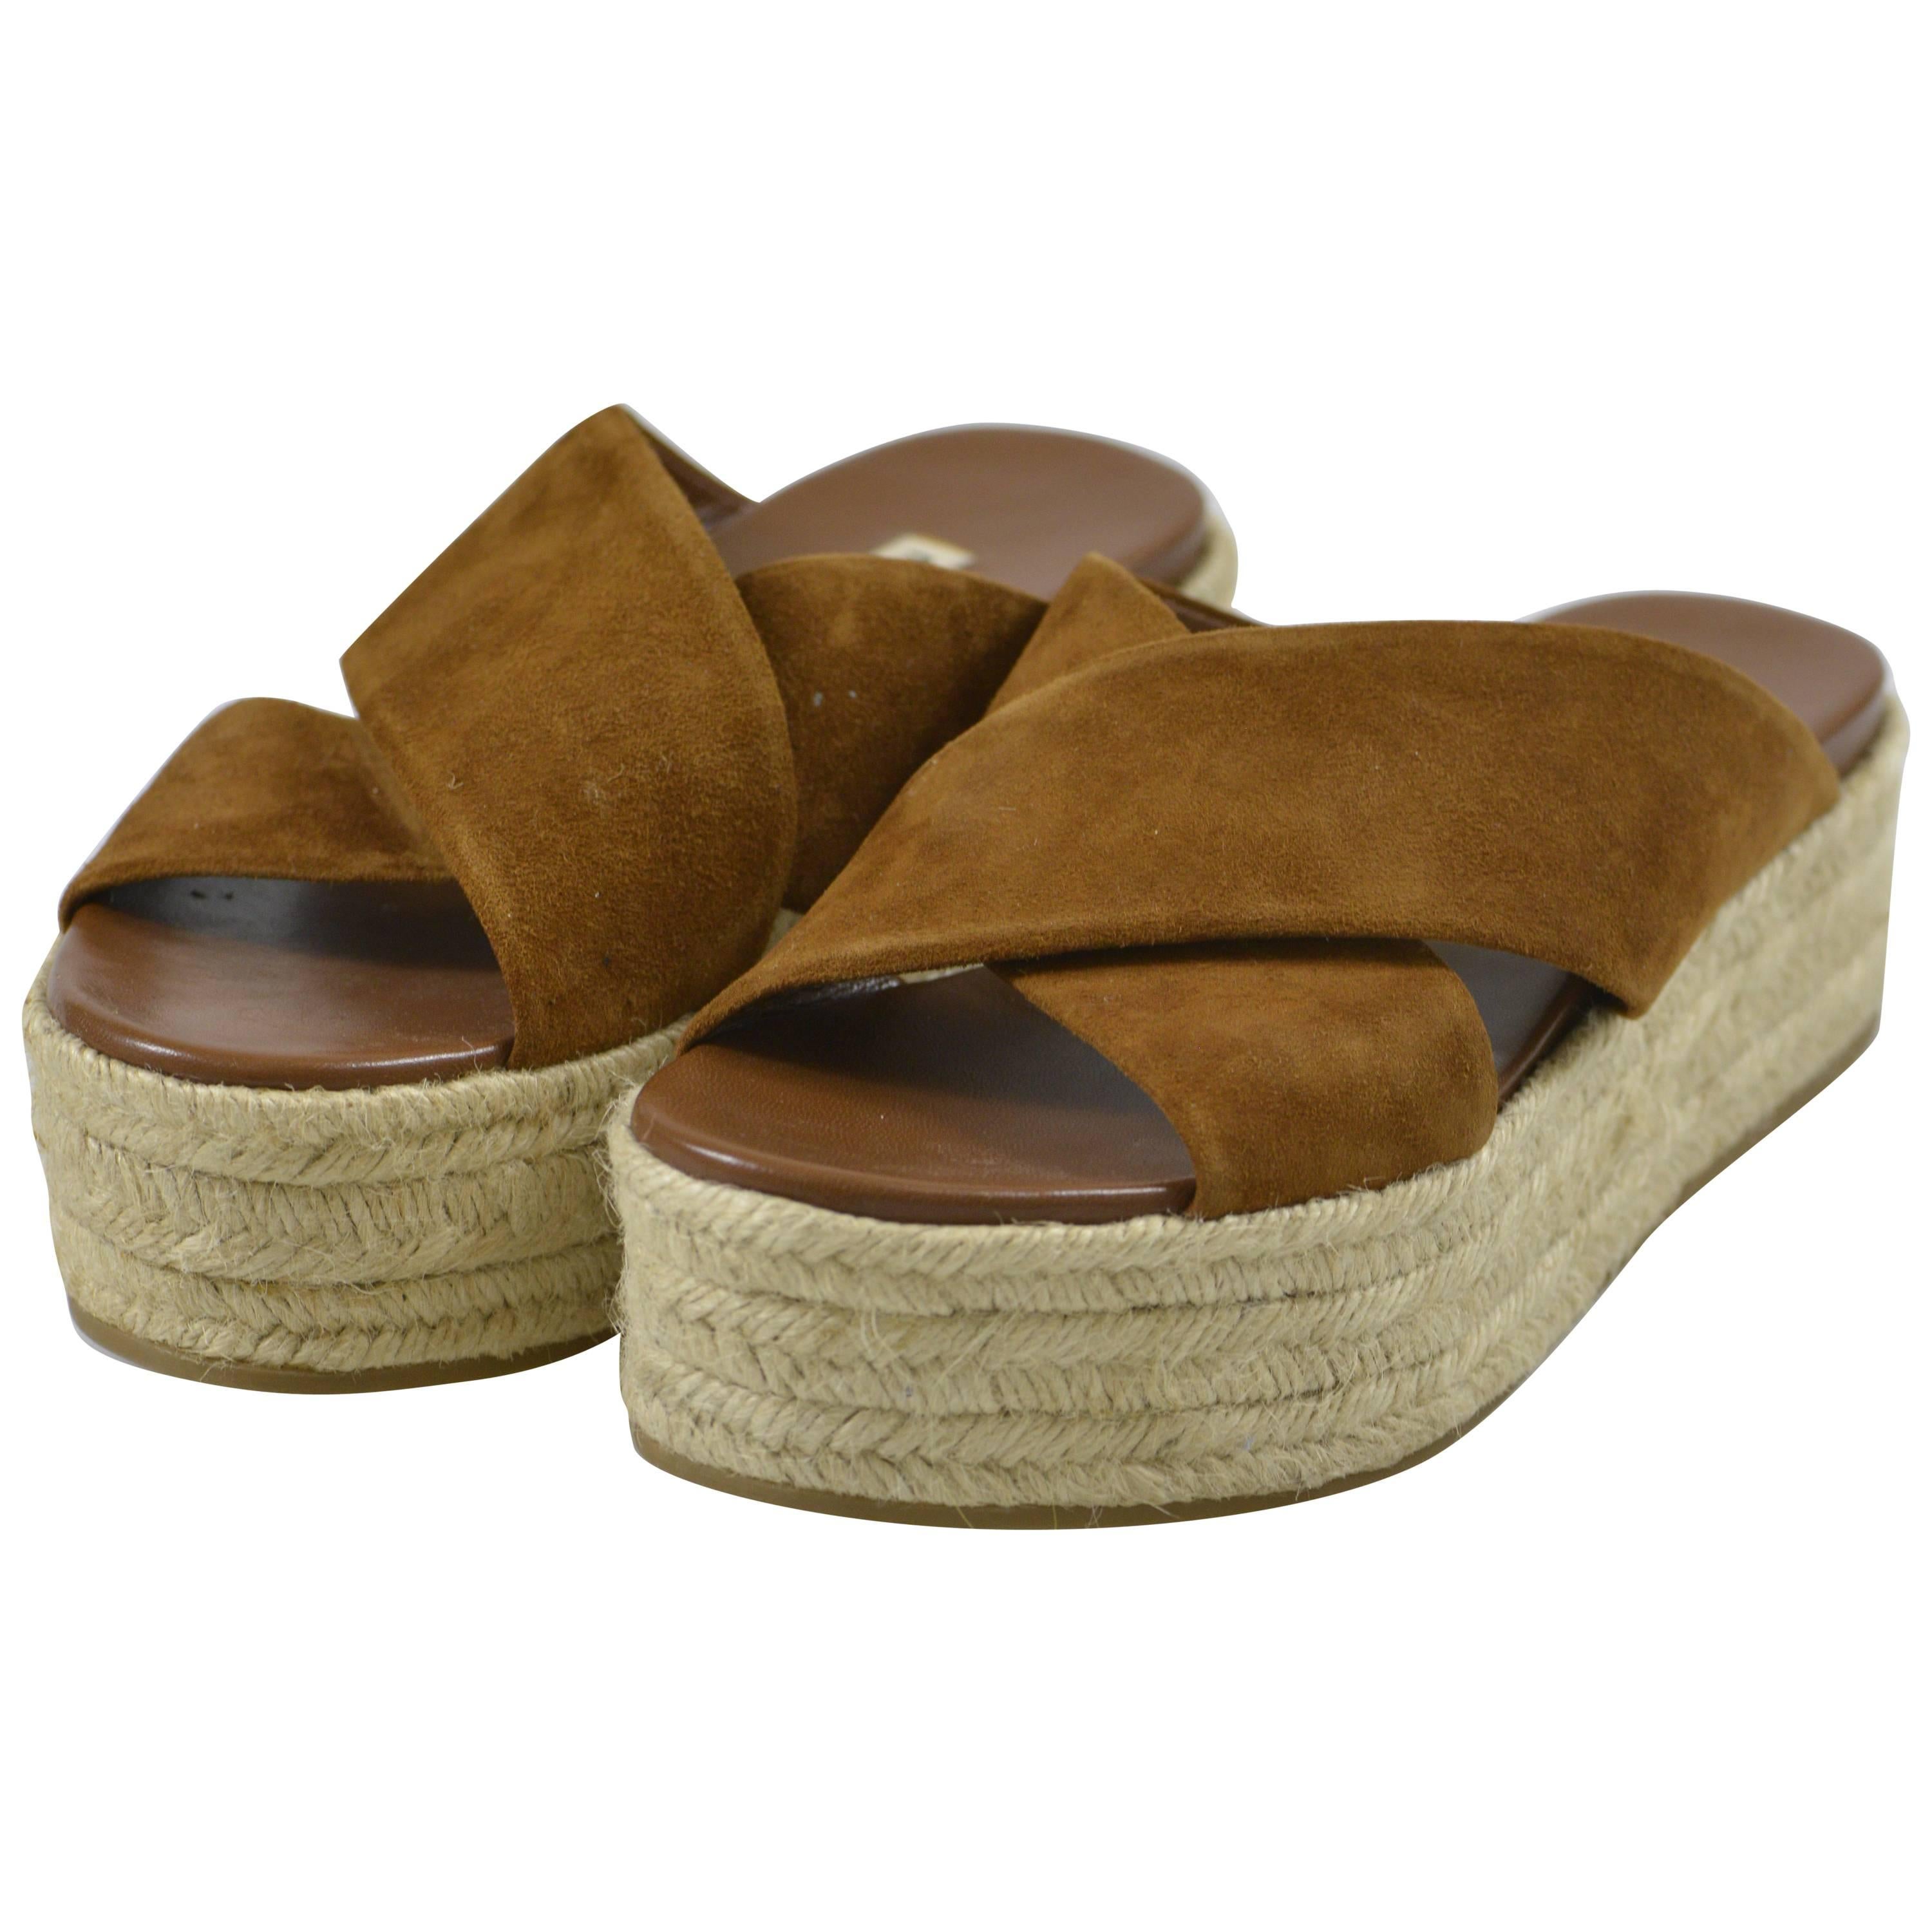 MIU MIU PRADA Brown Suede Leather Espadrille Platform Sandals Mules